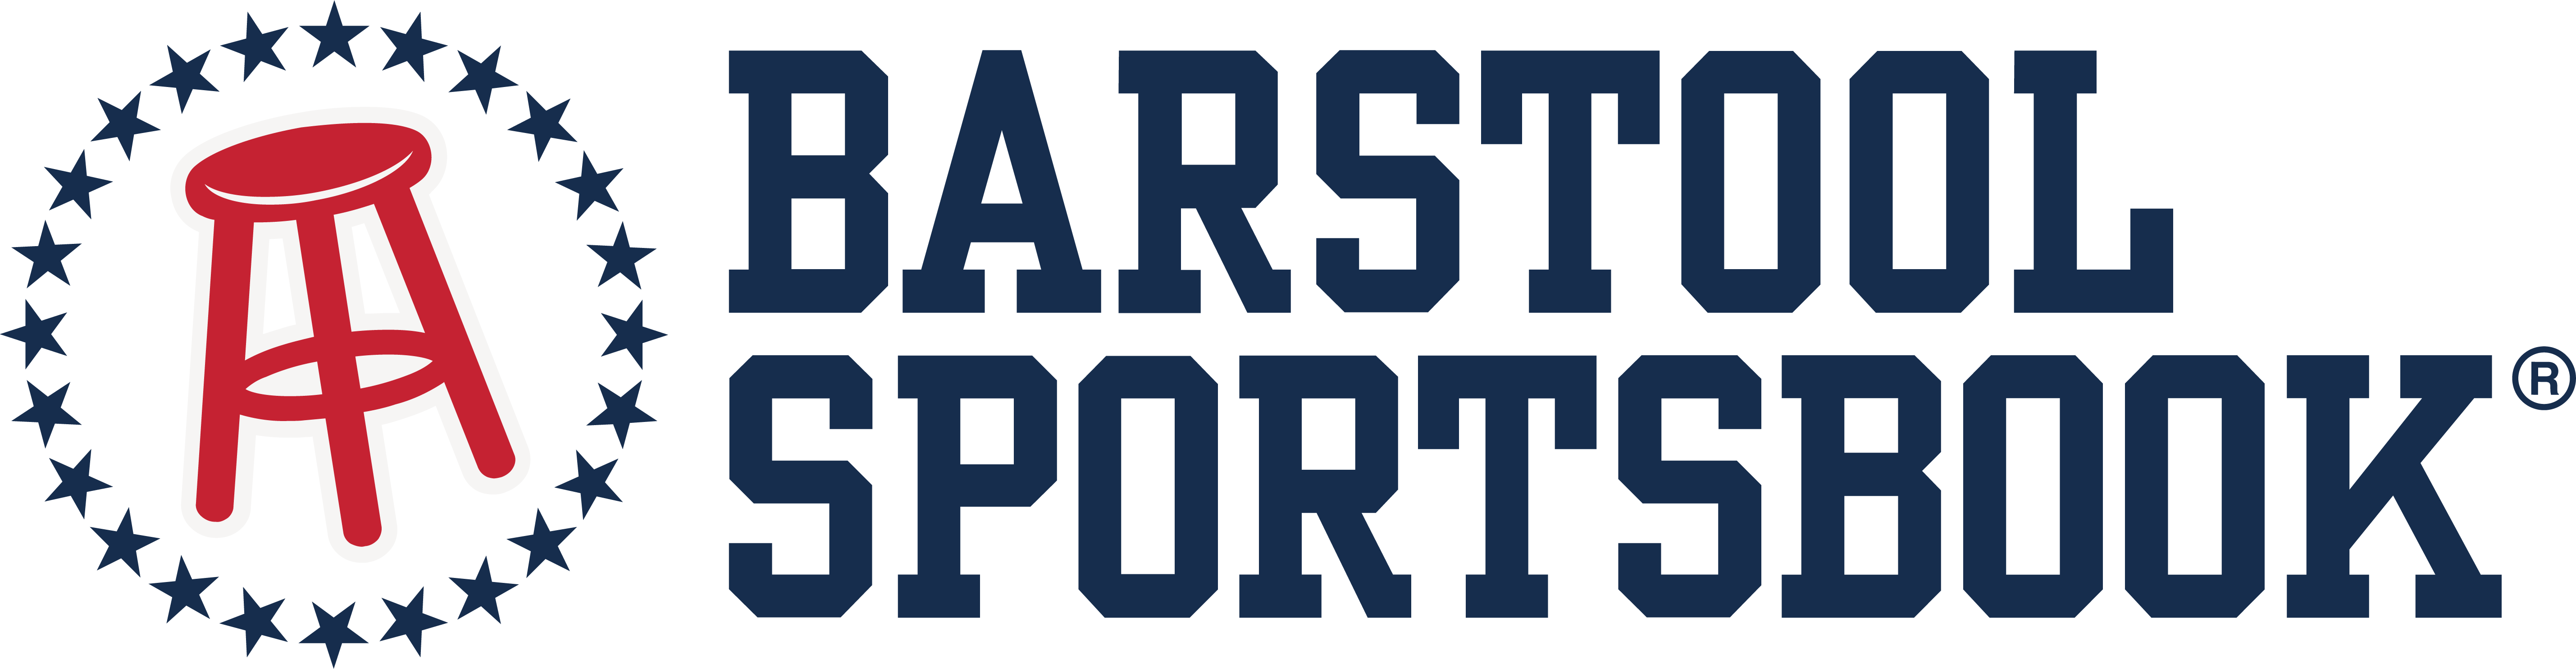 barstool-sportsbook-logo